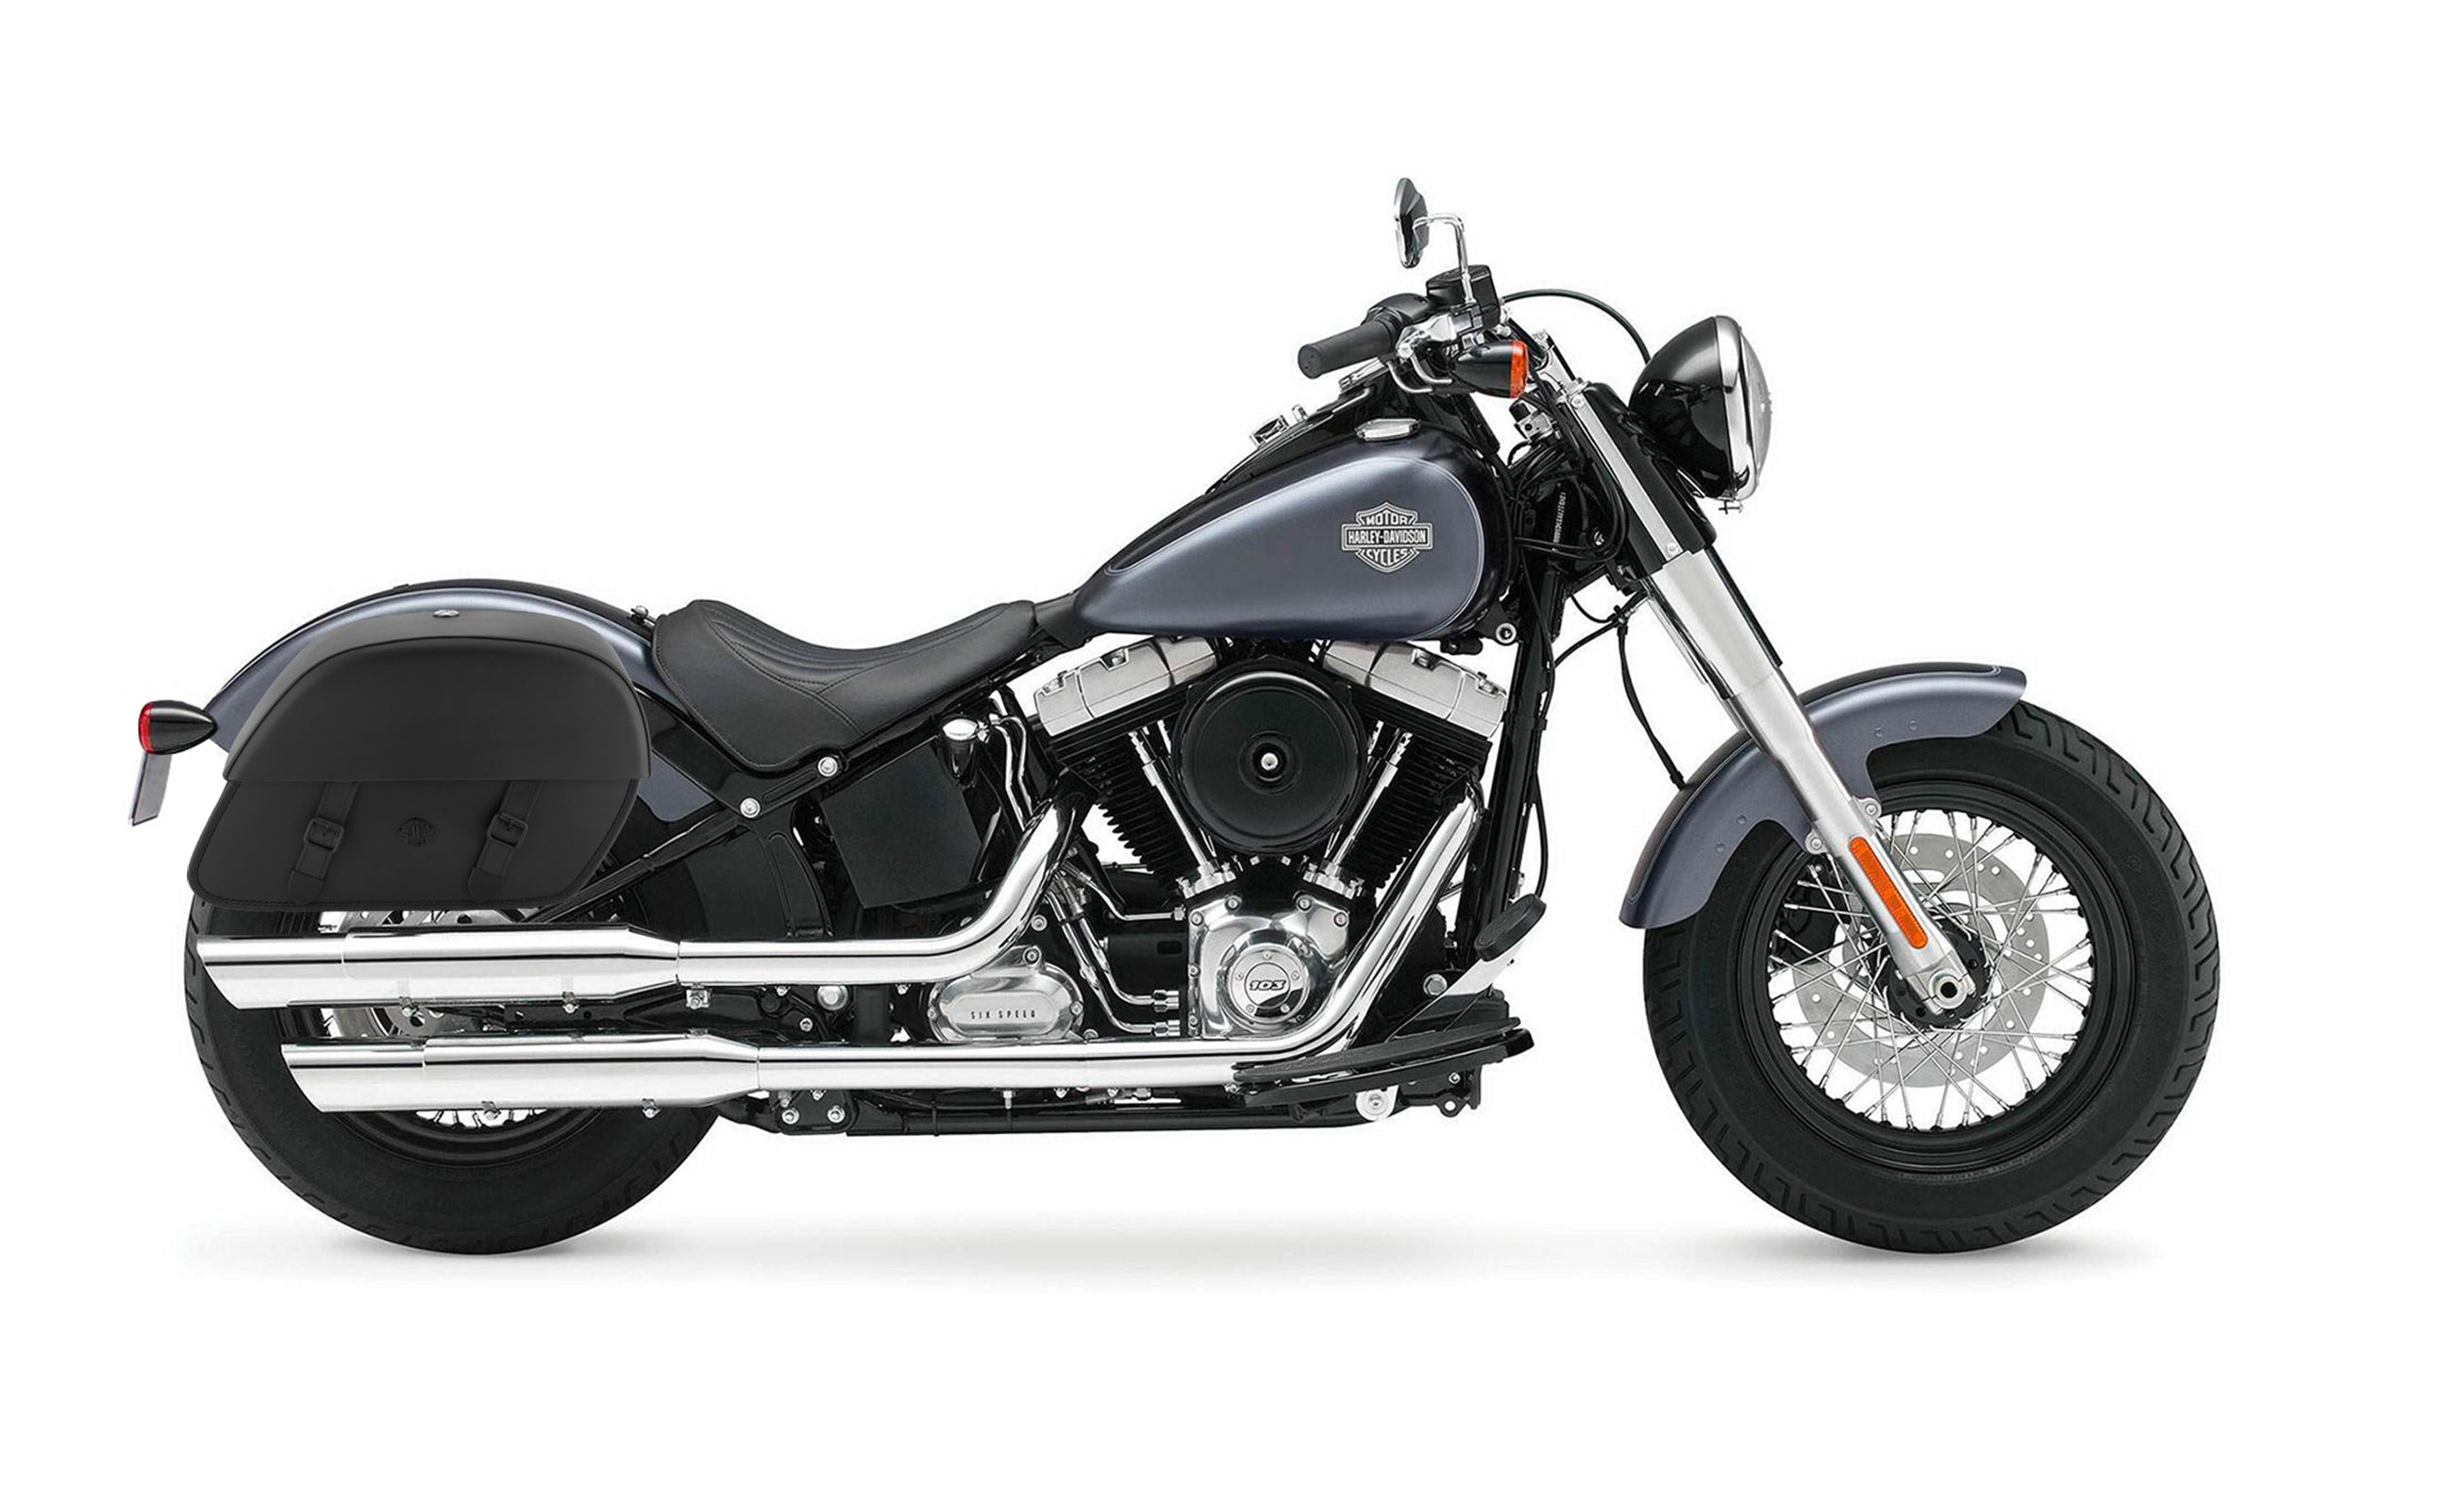 33L - Baelor Large Leather Motorcycle Saddlebags For Harley Softail Slim FLS on Bike Photo @expand